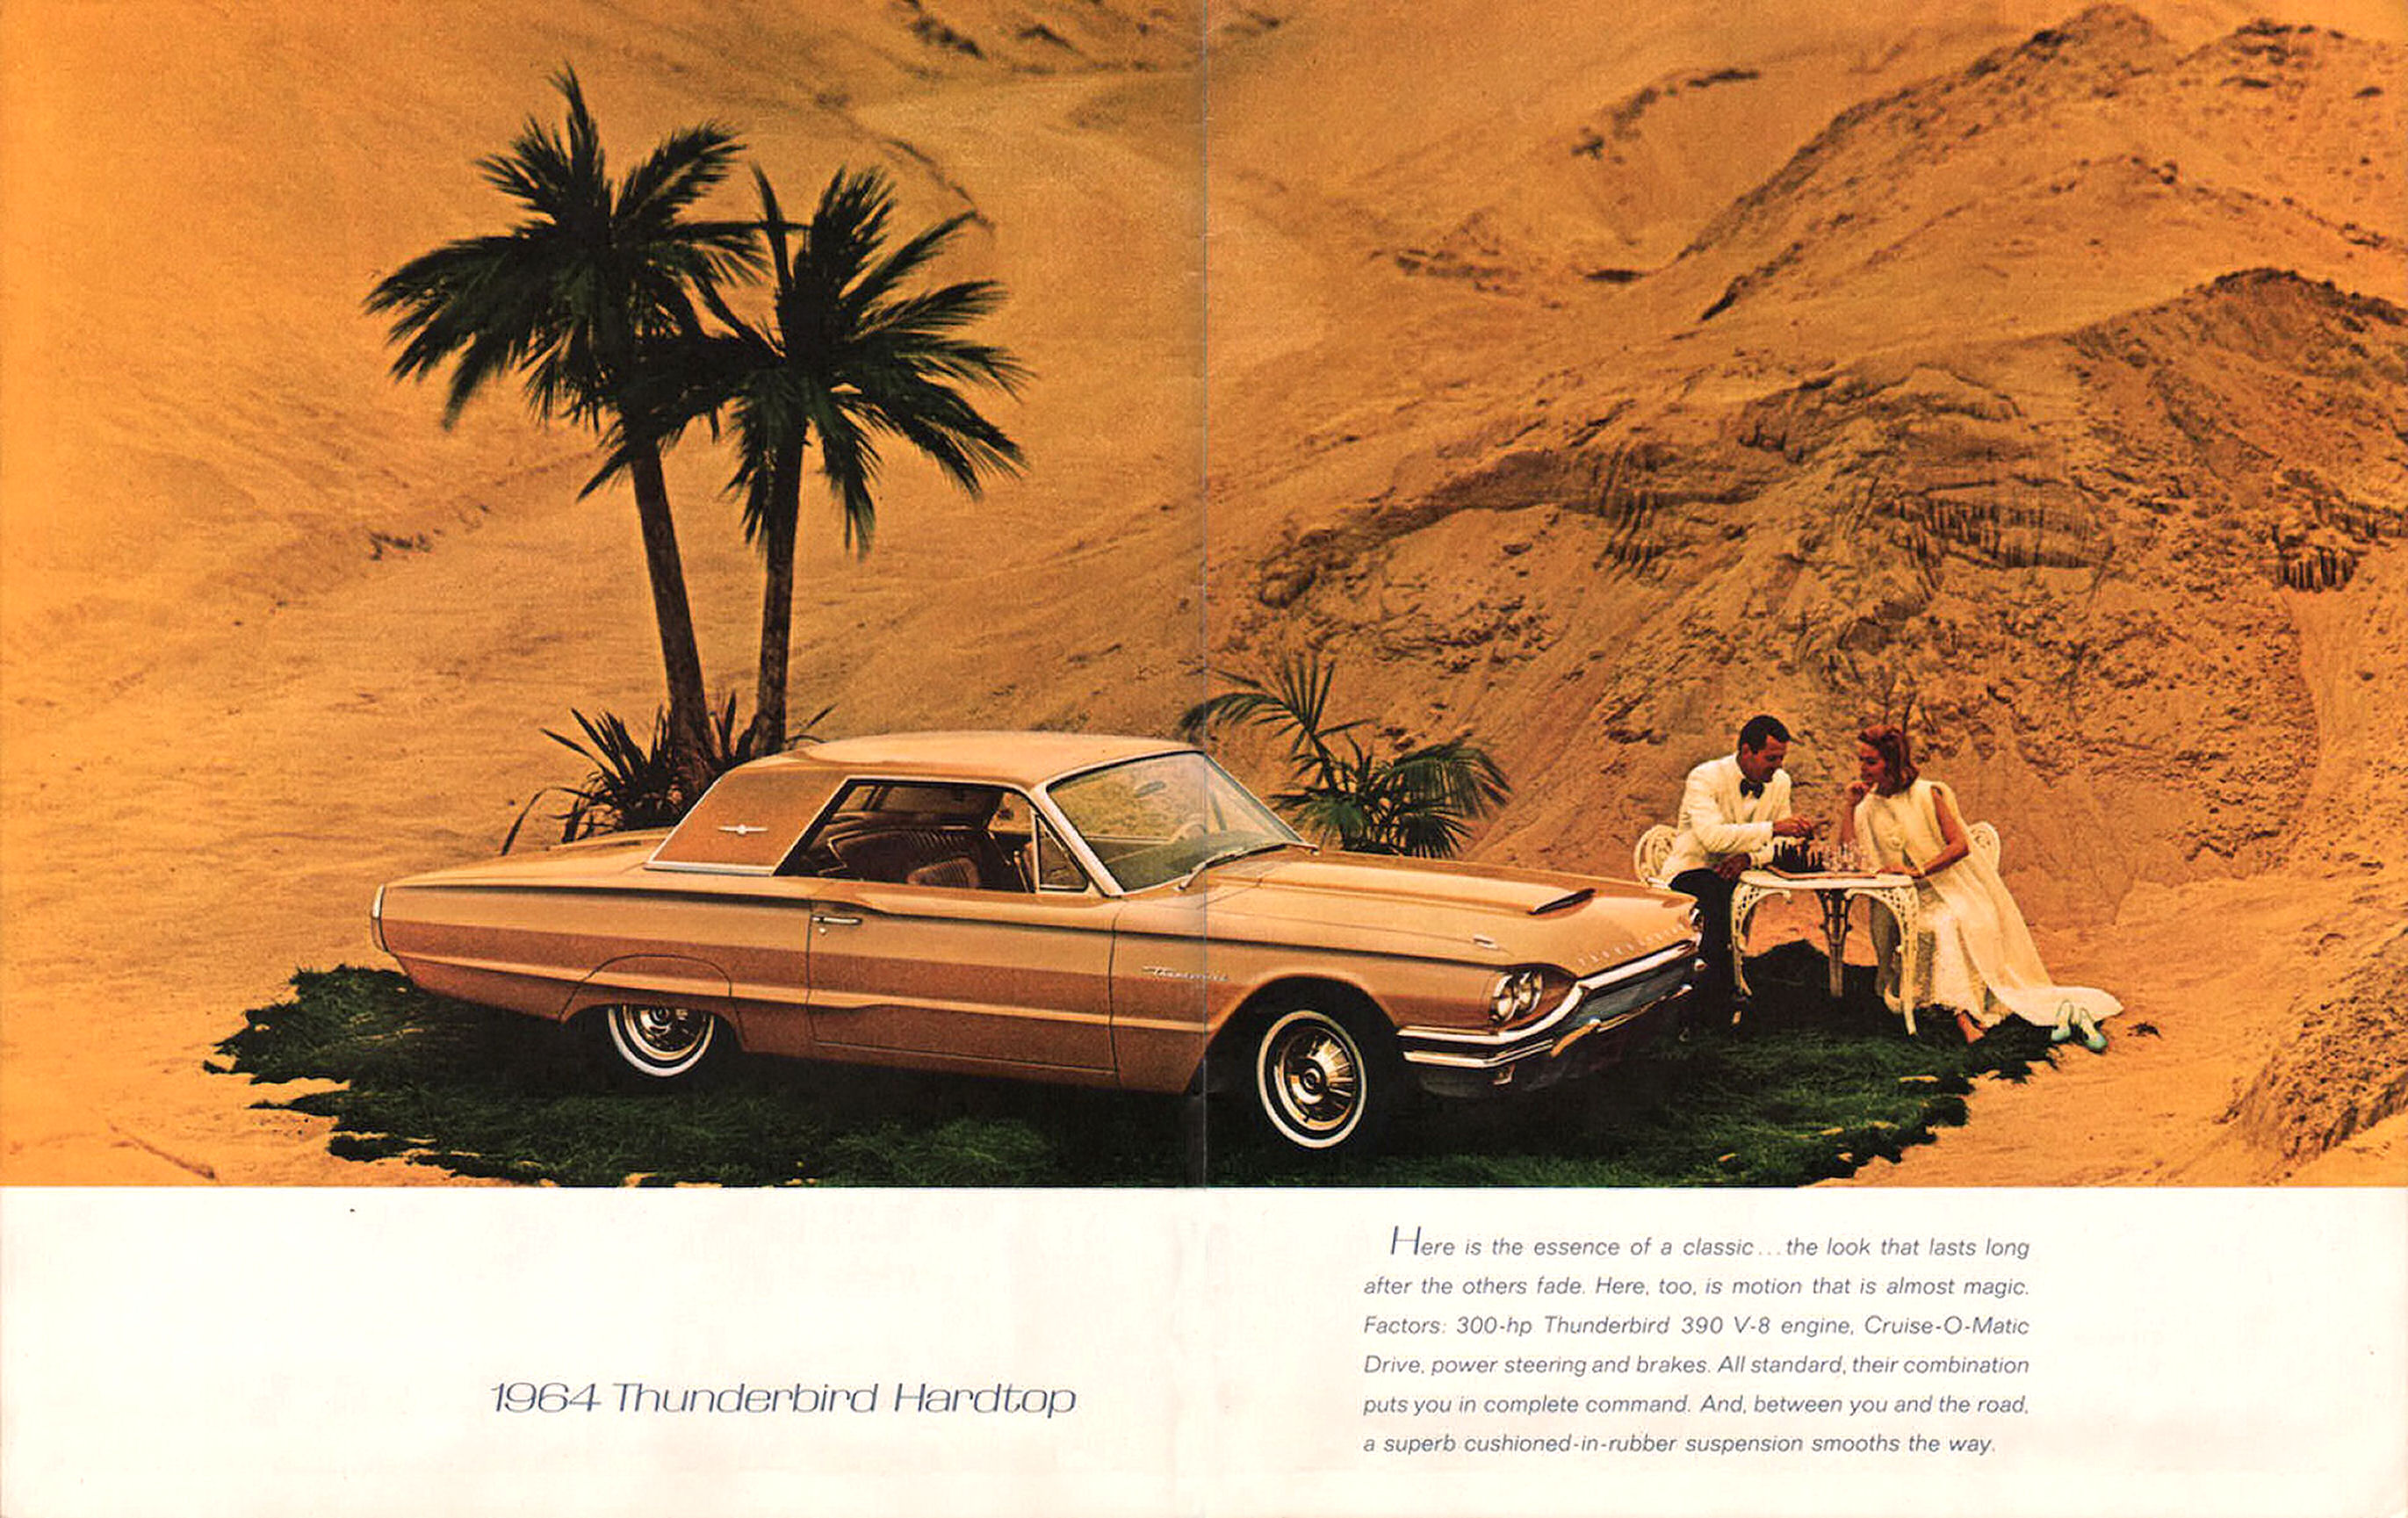 1964_Ford_Thunderbird-08-09